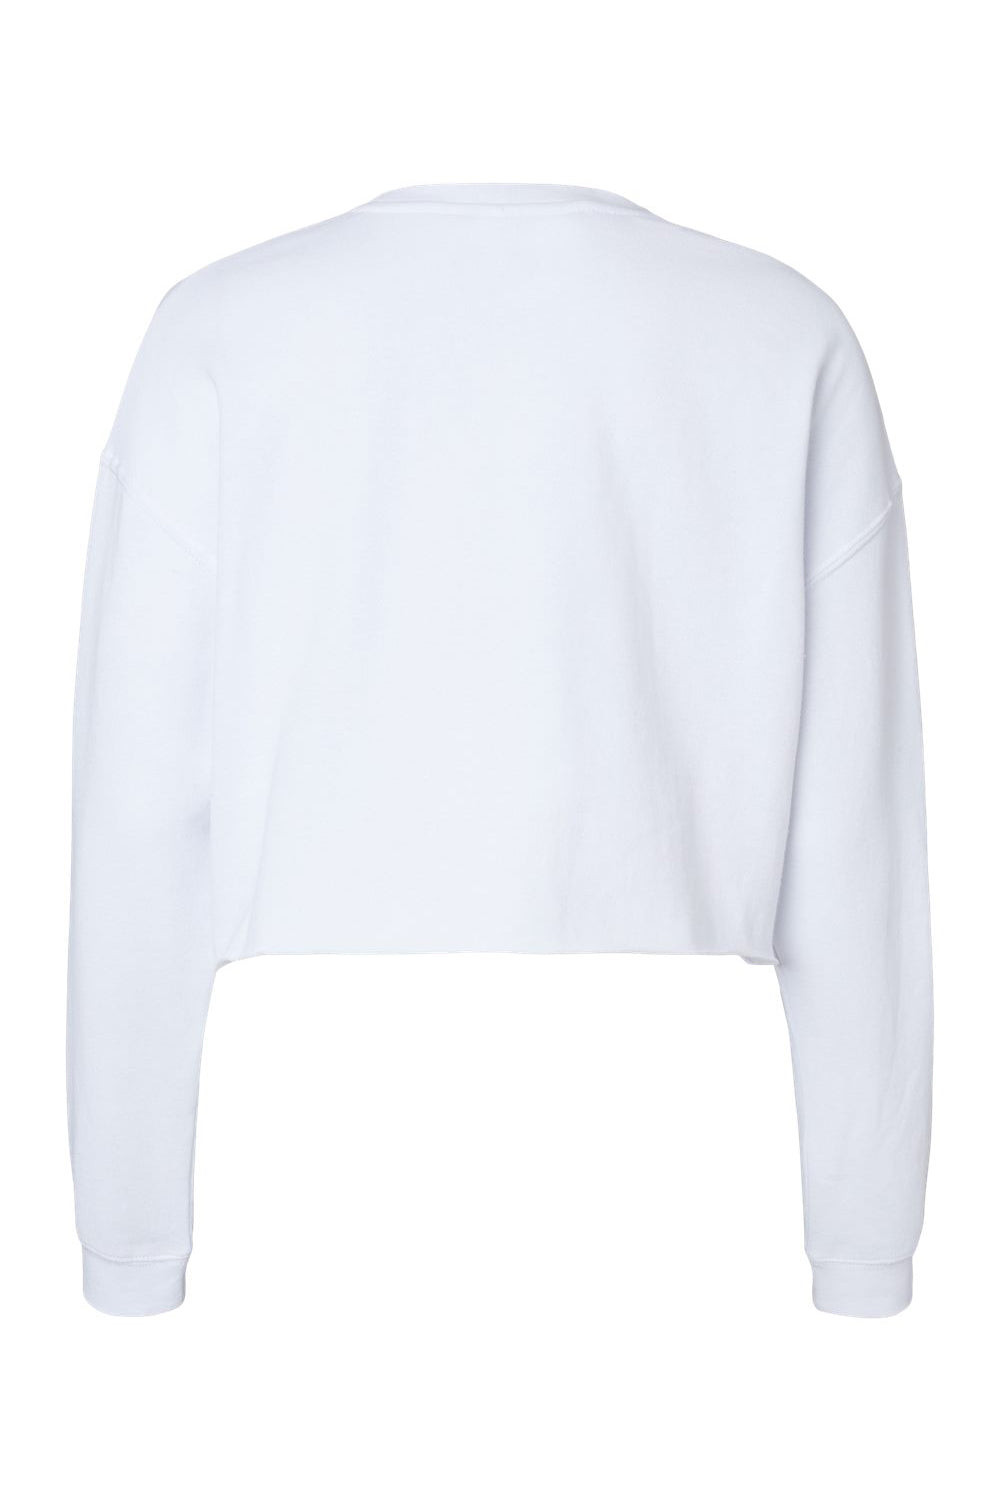 Independent Trading Co. AFX24CRP Womens Crop Crewneck Sweatshirt White Flat Back